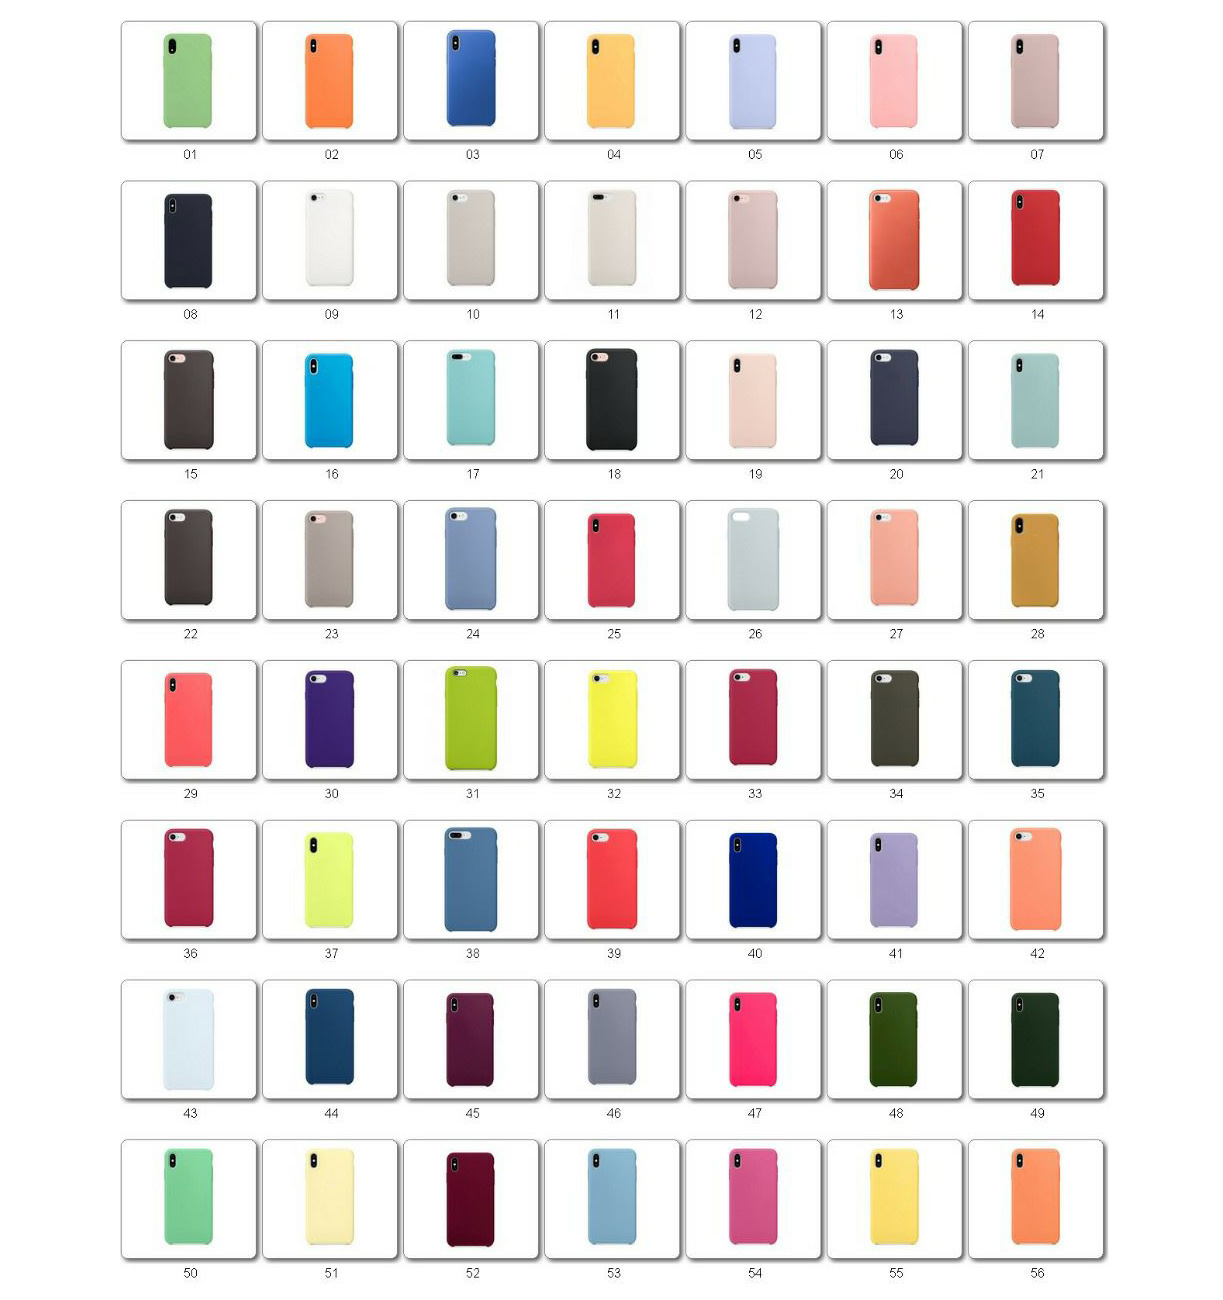 Чехол накладка Silicon Case для APPLE iPhone X, XS, силикон, бархат, цвет фиолетовый.